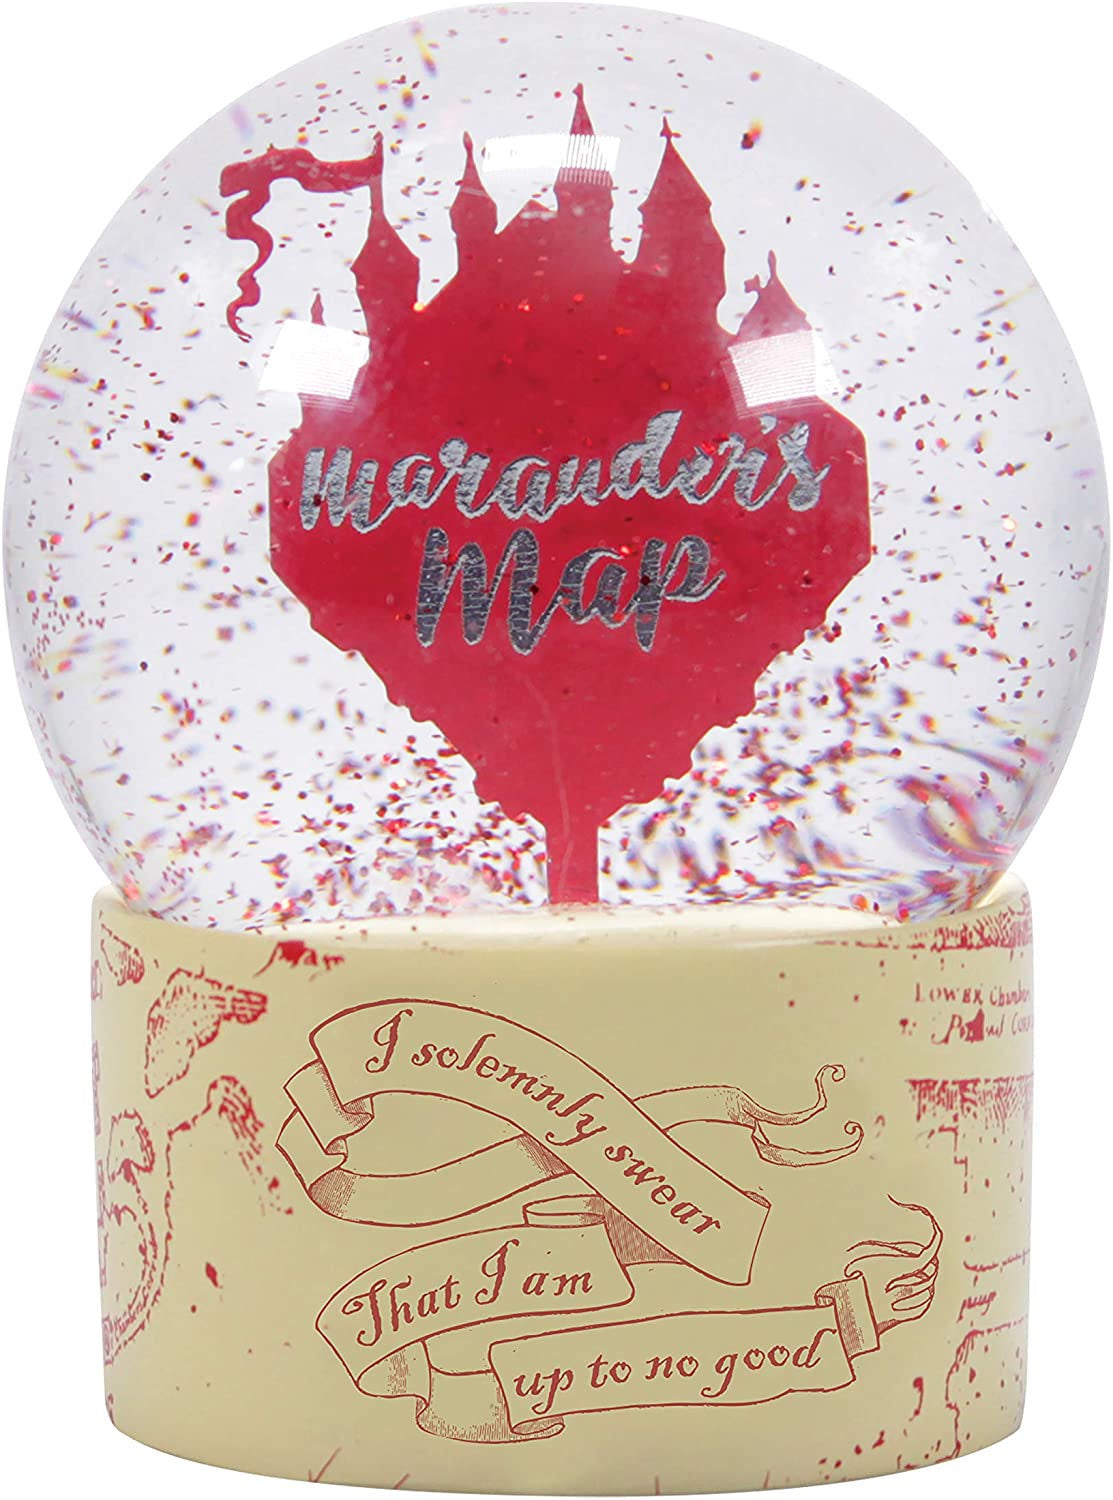 Harry Potter Snow Globe - Marauder's Map